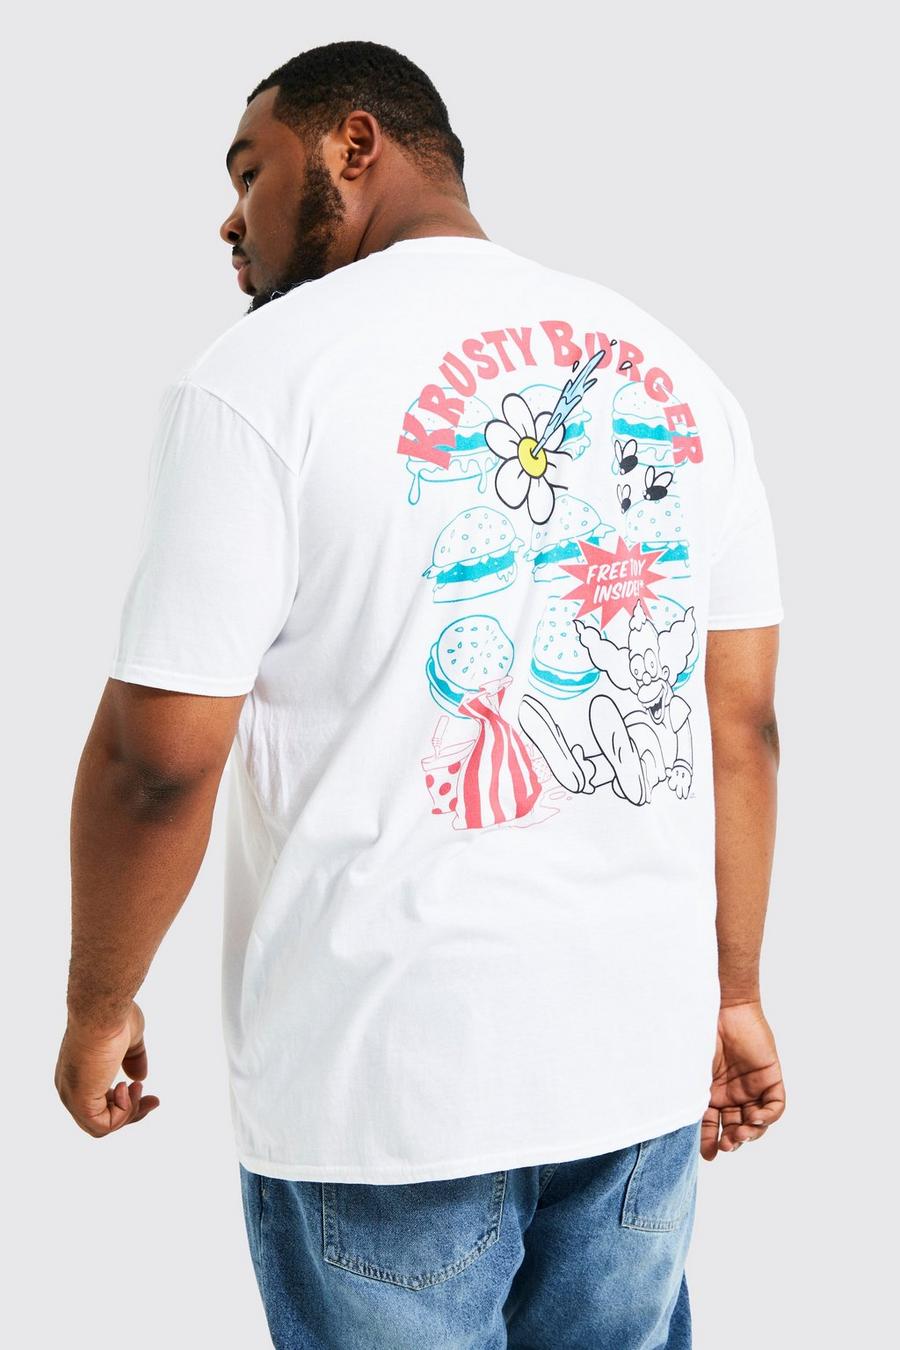 T-shirt Plus Size ufficiale Krusty dei Simpson, White blanco